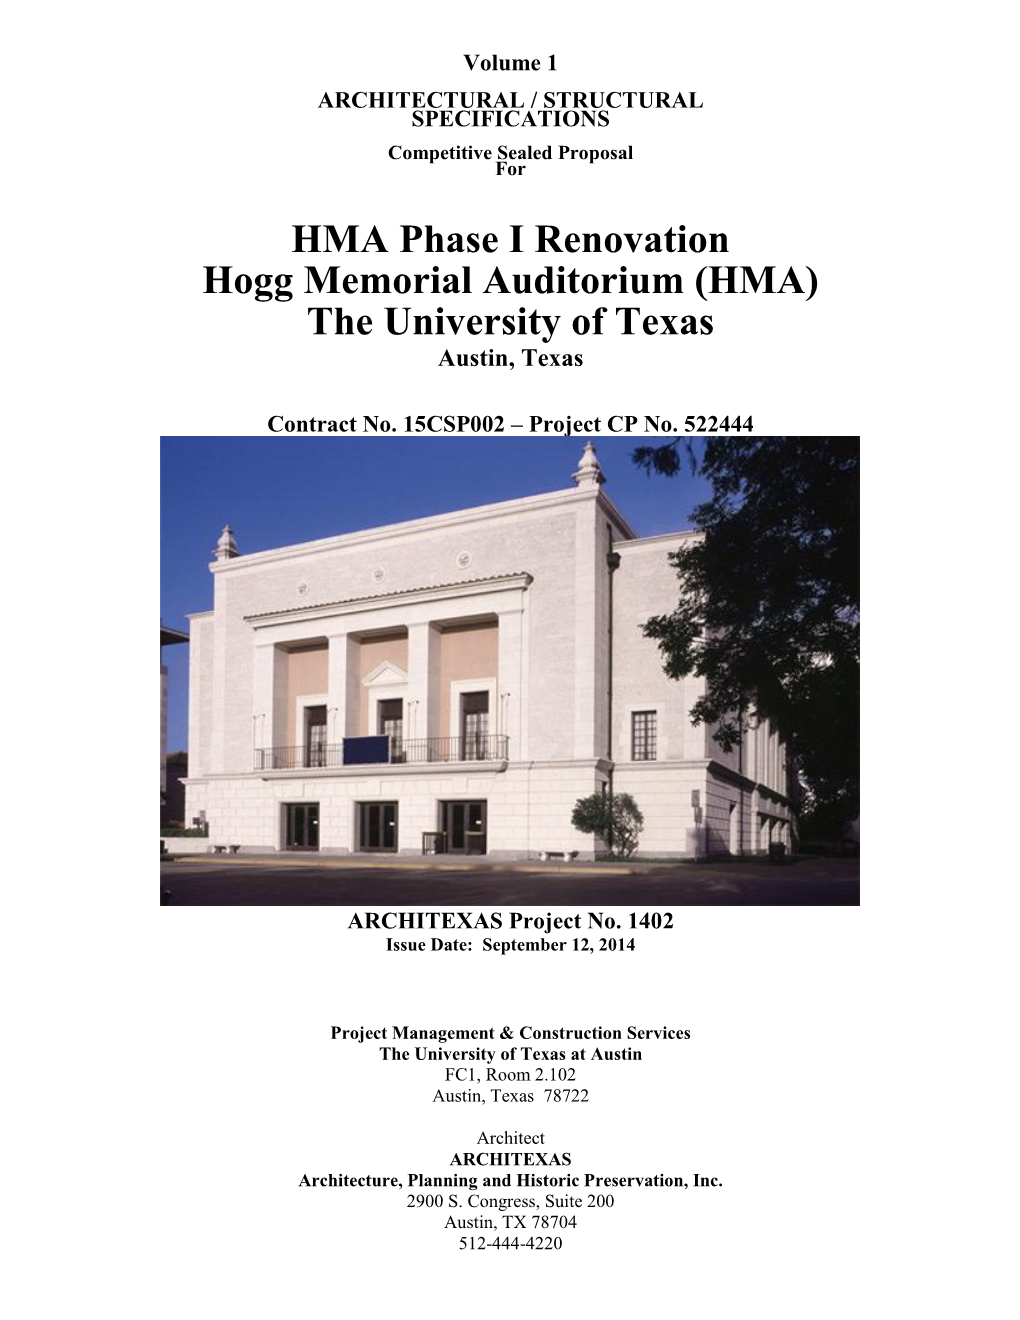 HMA Phase I Renovation Hogg Memorial Auditorium (HMA) the University of Texas Austin, Texas